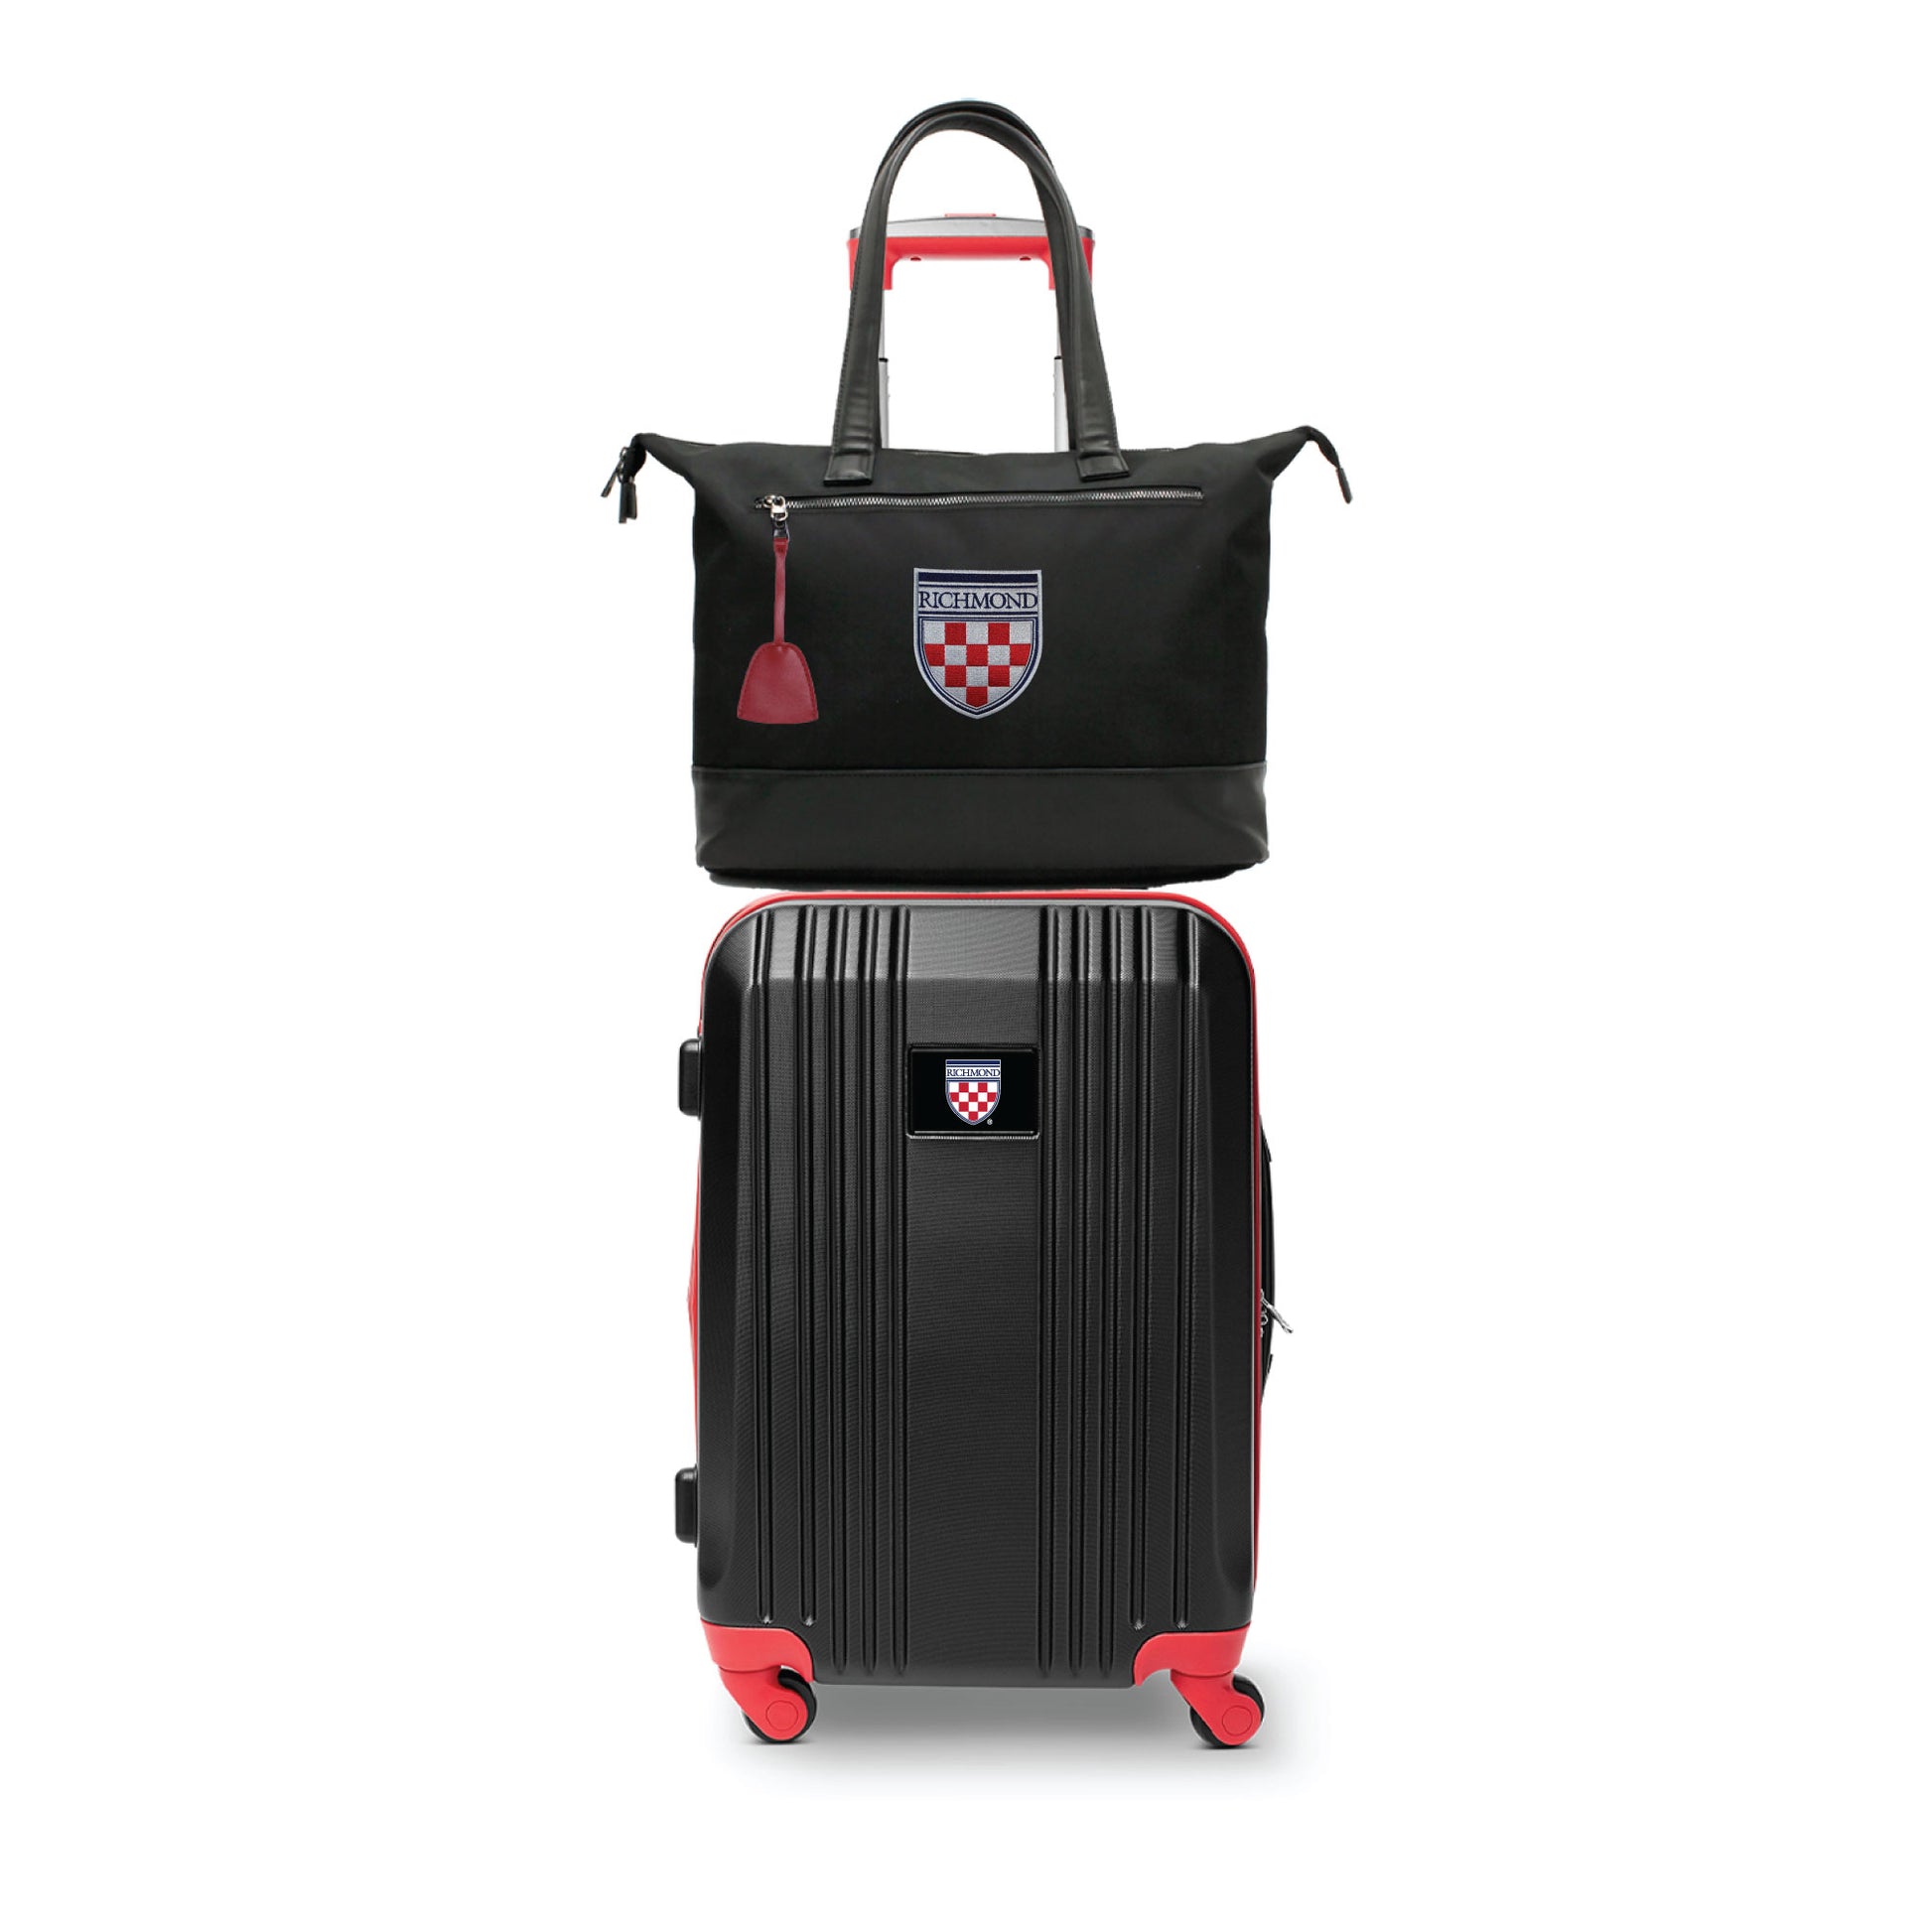 Richmond Premium Laptop Tote Bag and Luggage Set